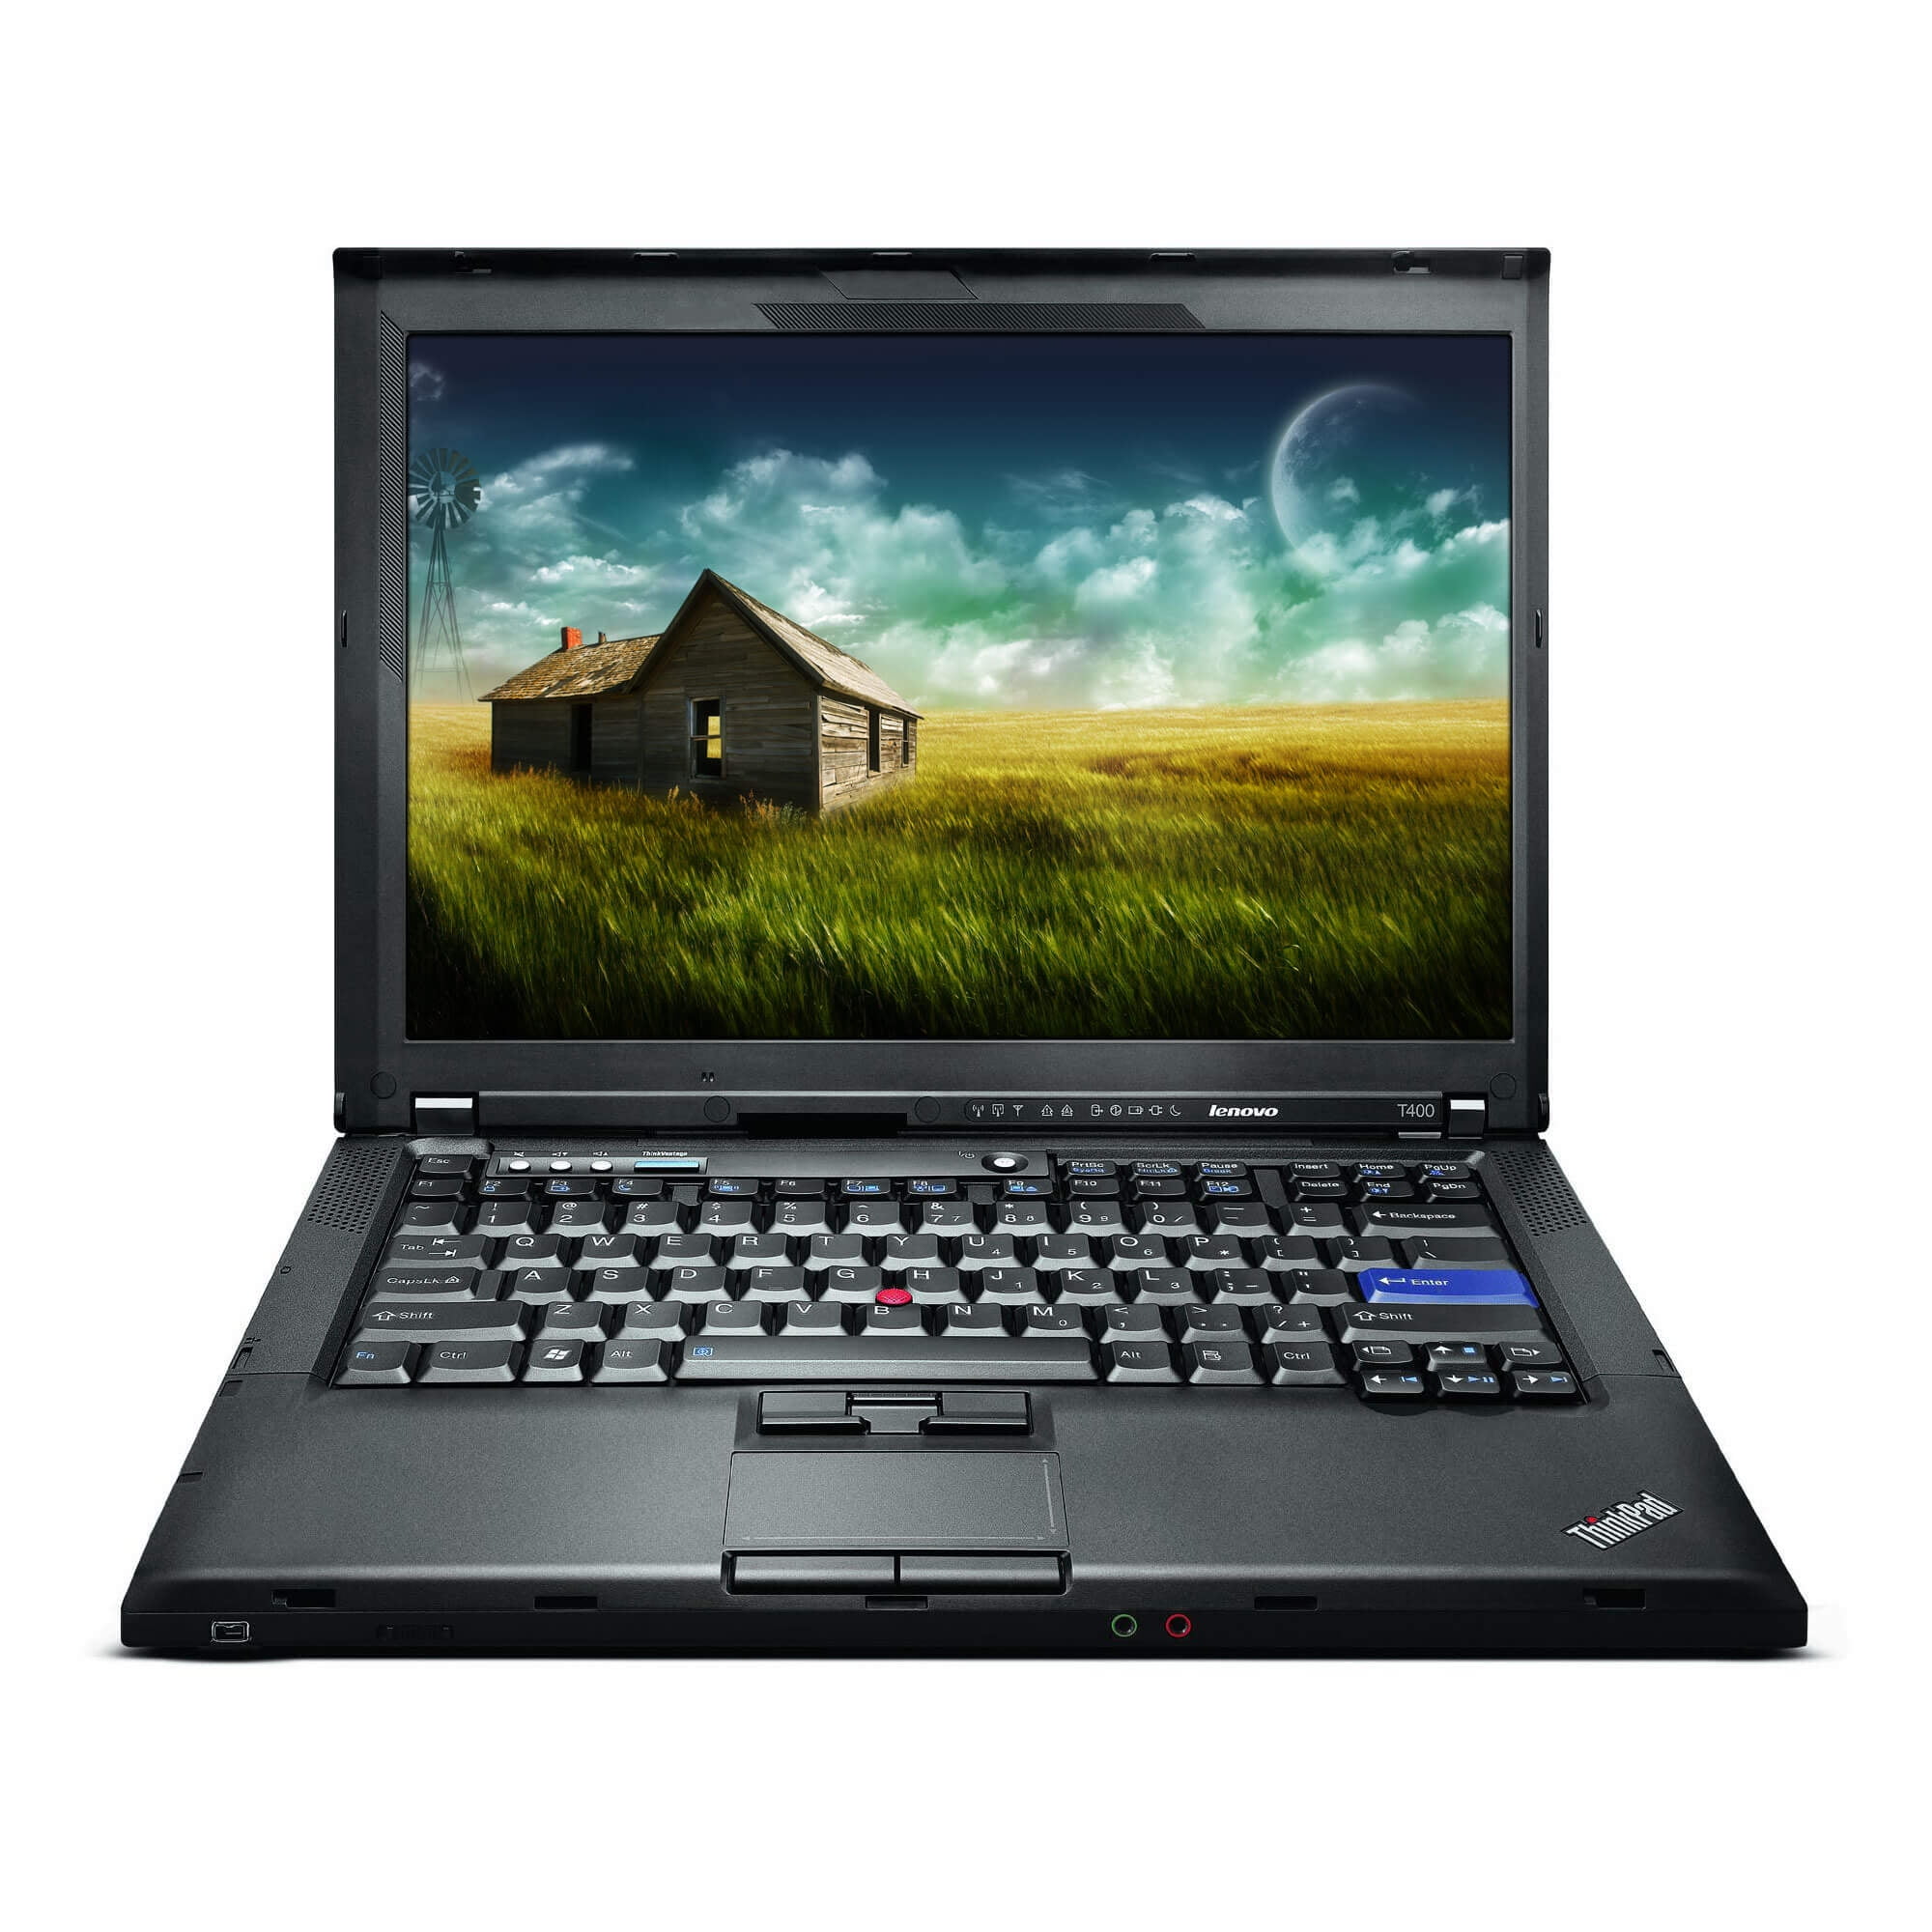 Lenovo thinkpad r400 laptop price tesla k20 k20m 5gb